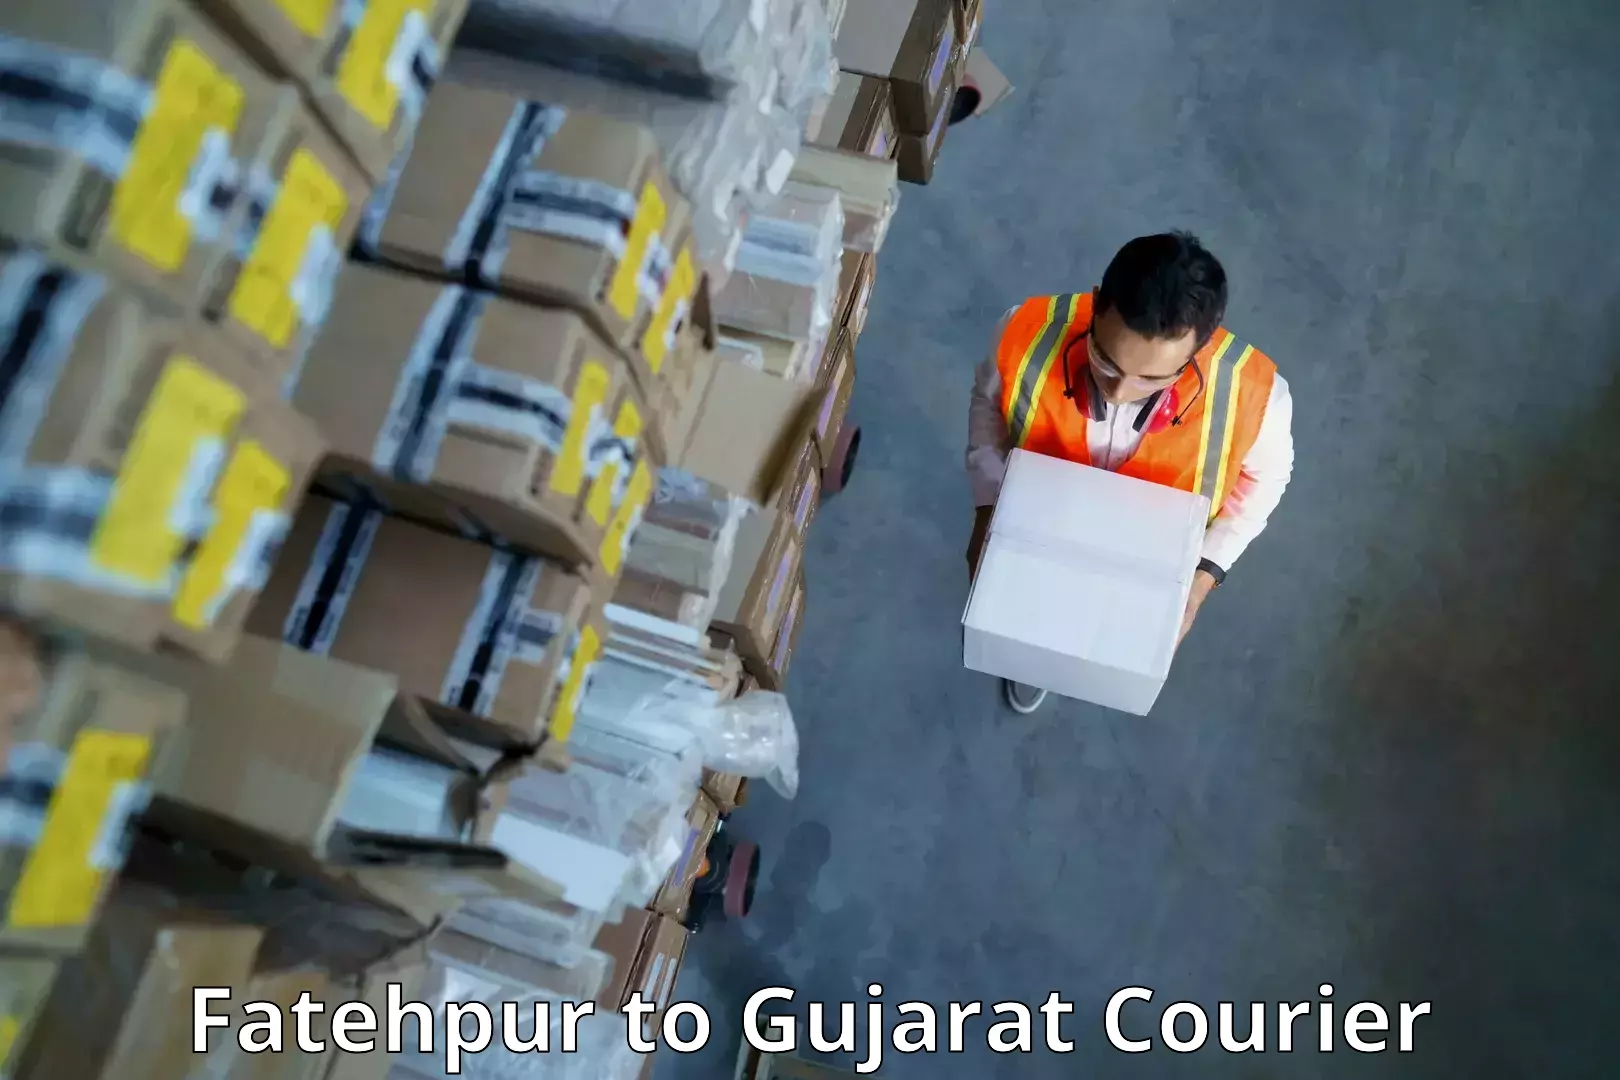 Courier service comparison Fatehpur to Dholera